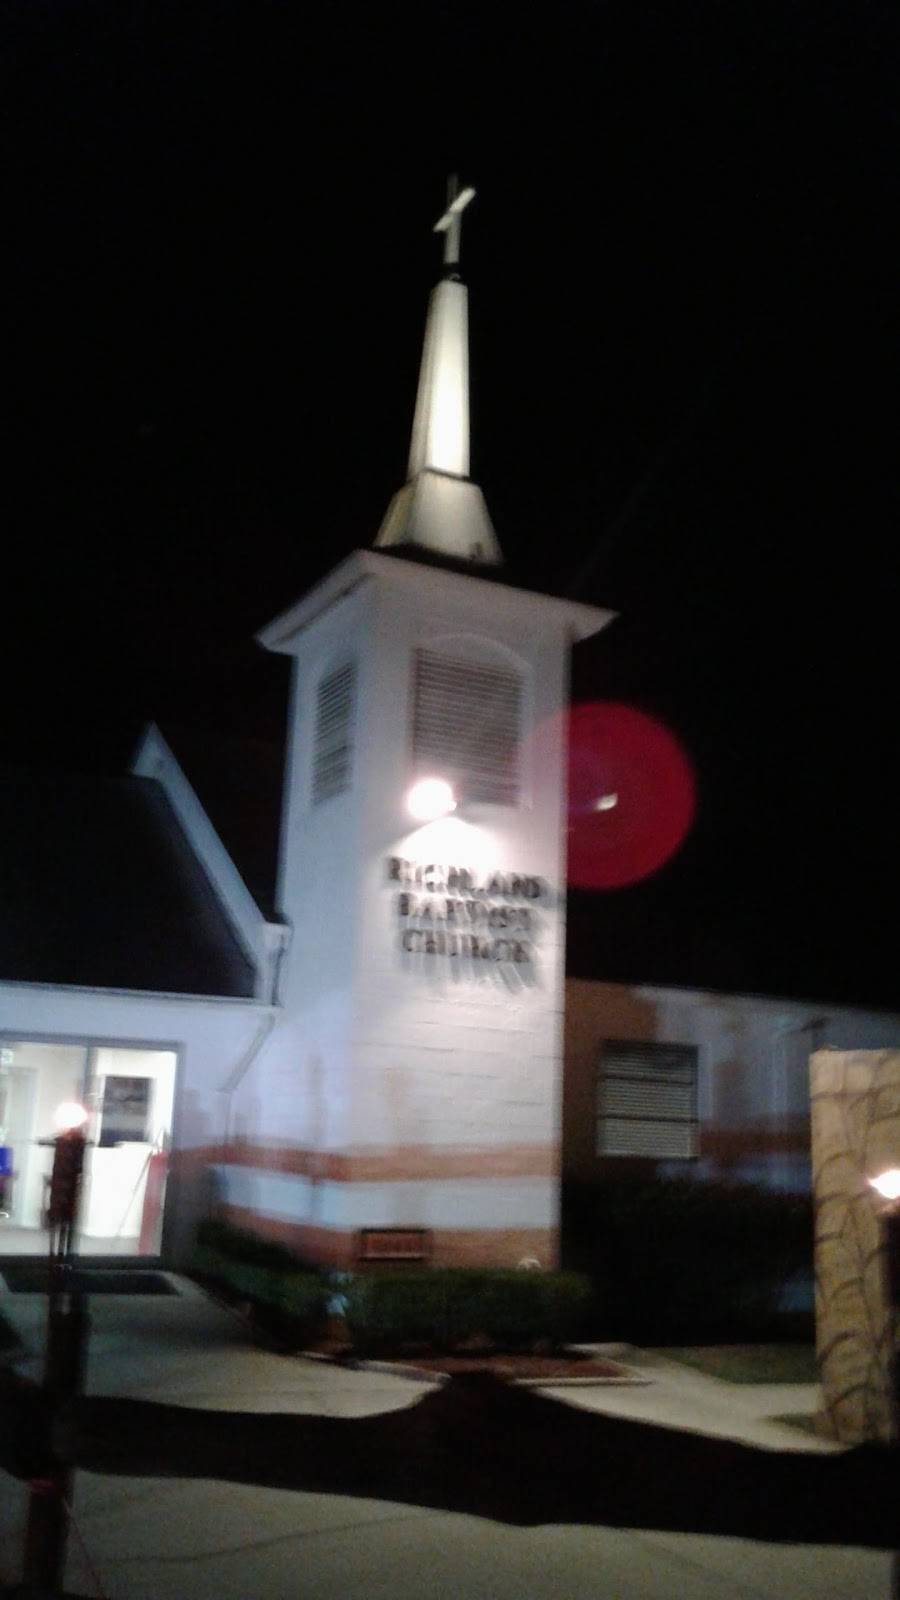 Richland Baptist Church | 40443 Stewart Rd, Zephyrhills, FL 33540, USA | Phone: (352) 567-2990